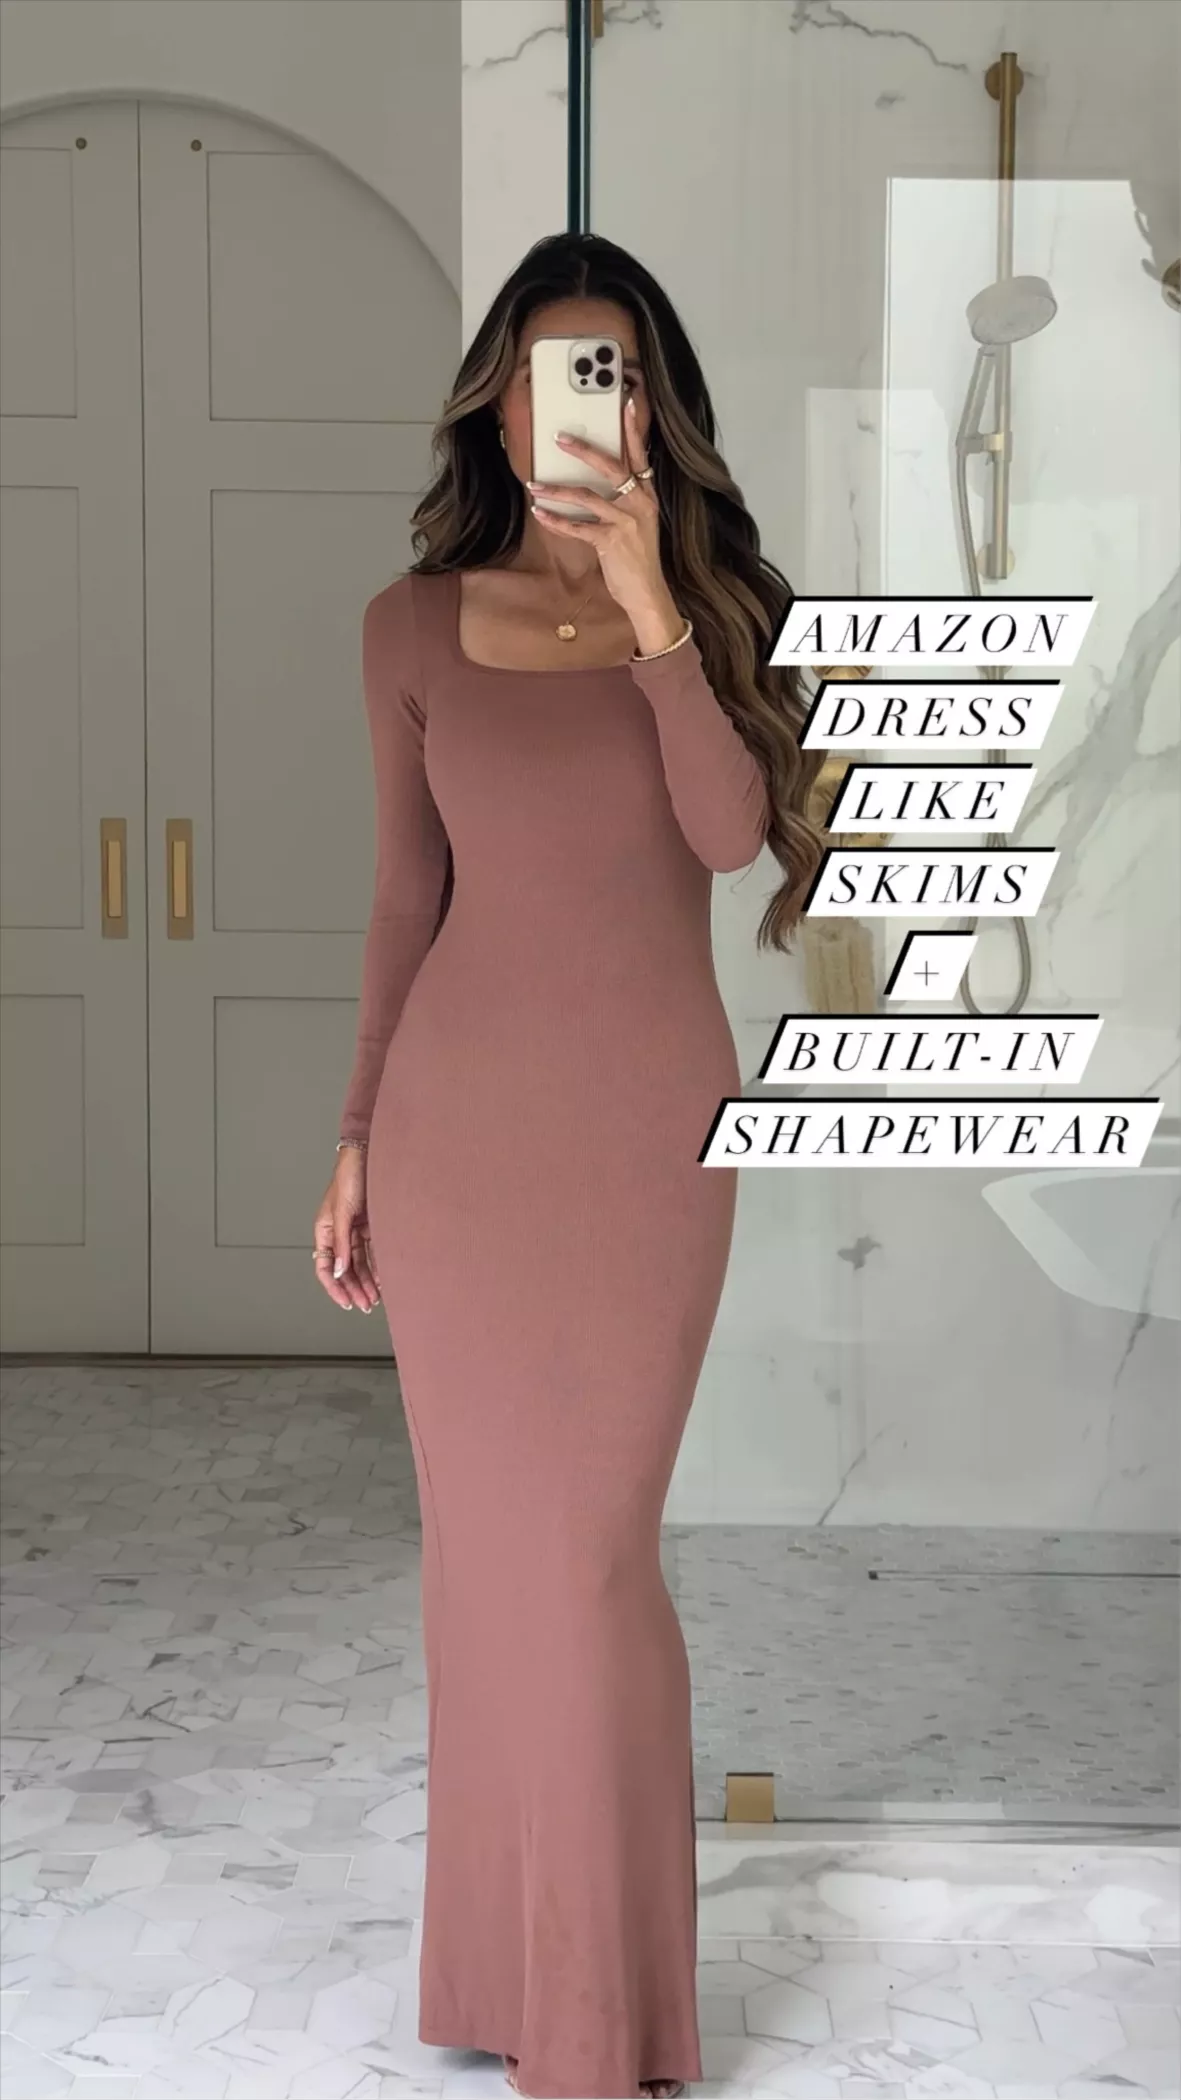 Popilush Shaper Dress Bodycon … curated on LTK